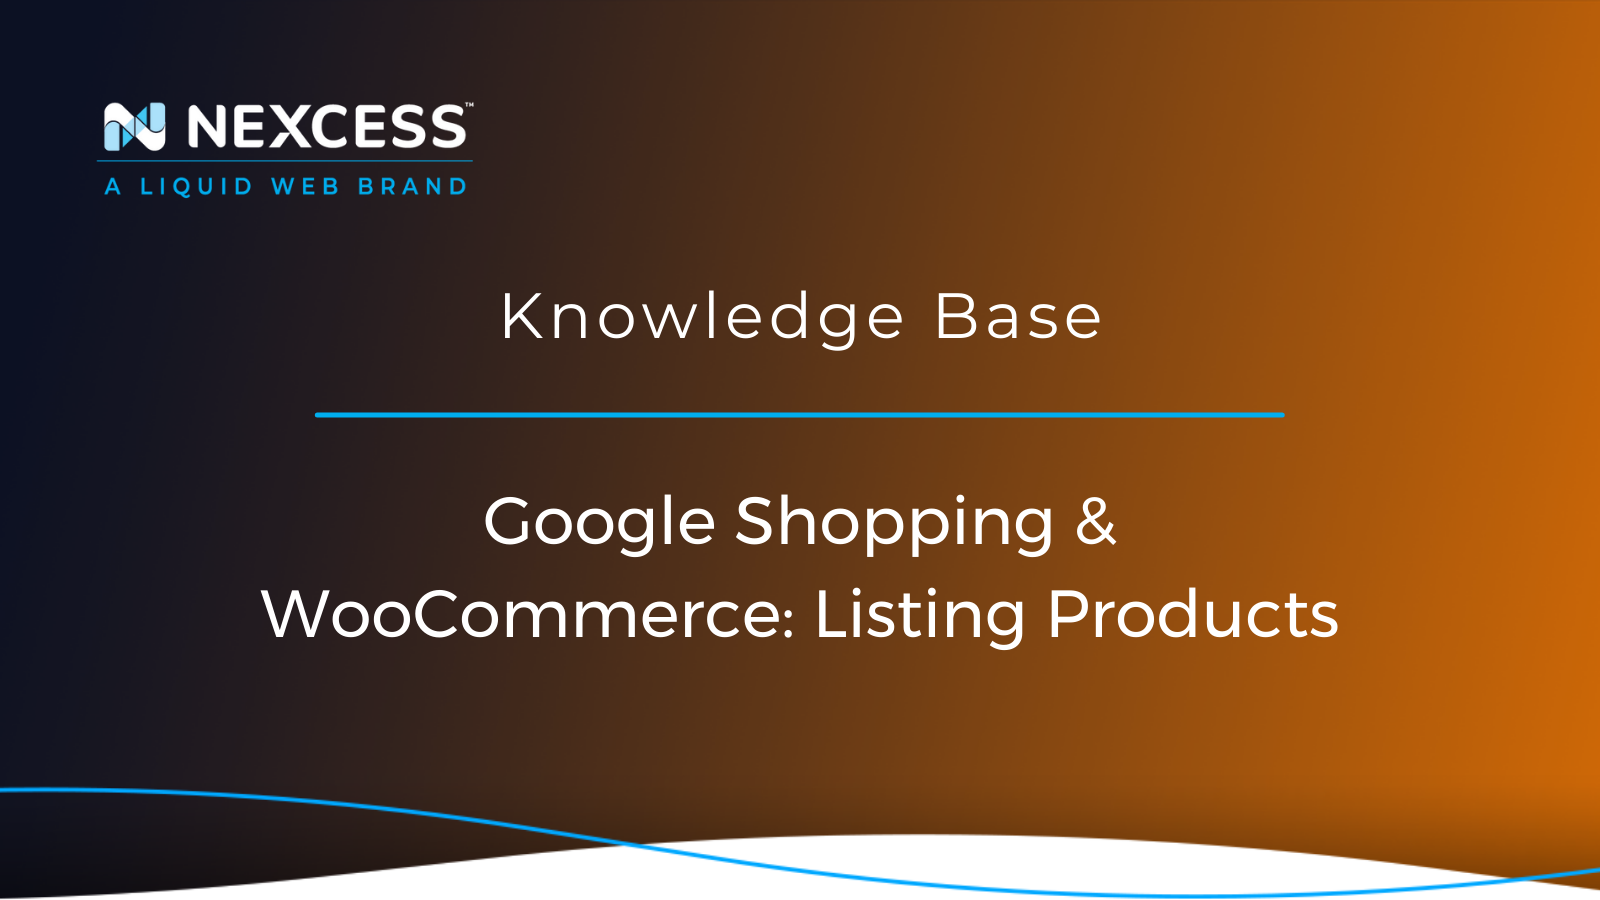 Google Shopping & WooCommerce: Listing Products